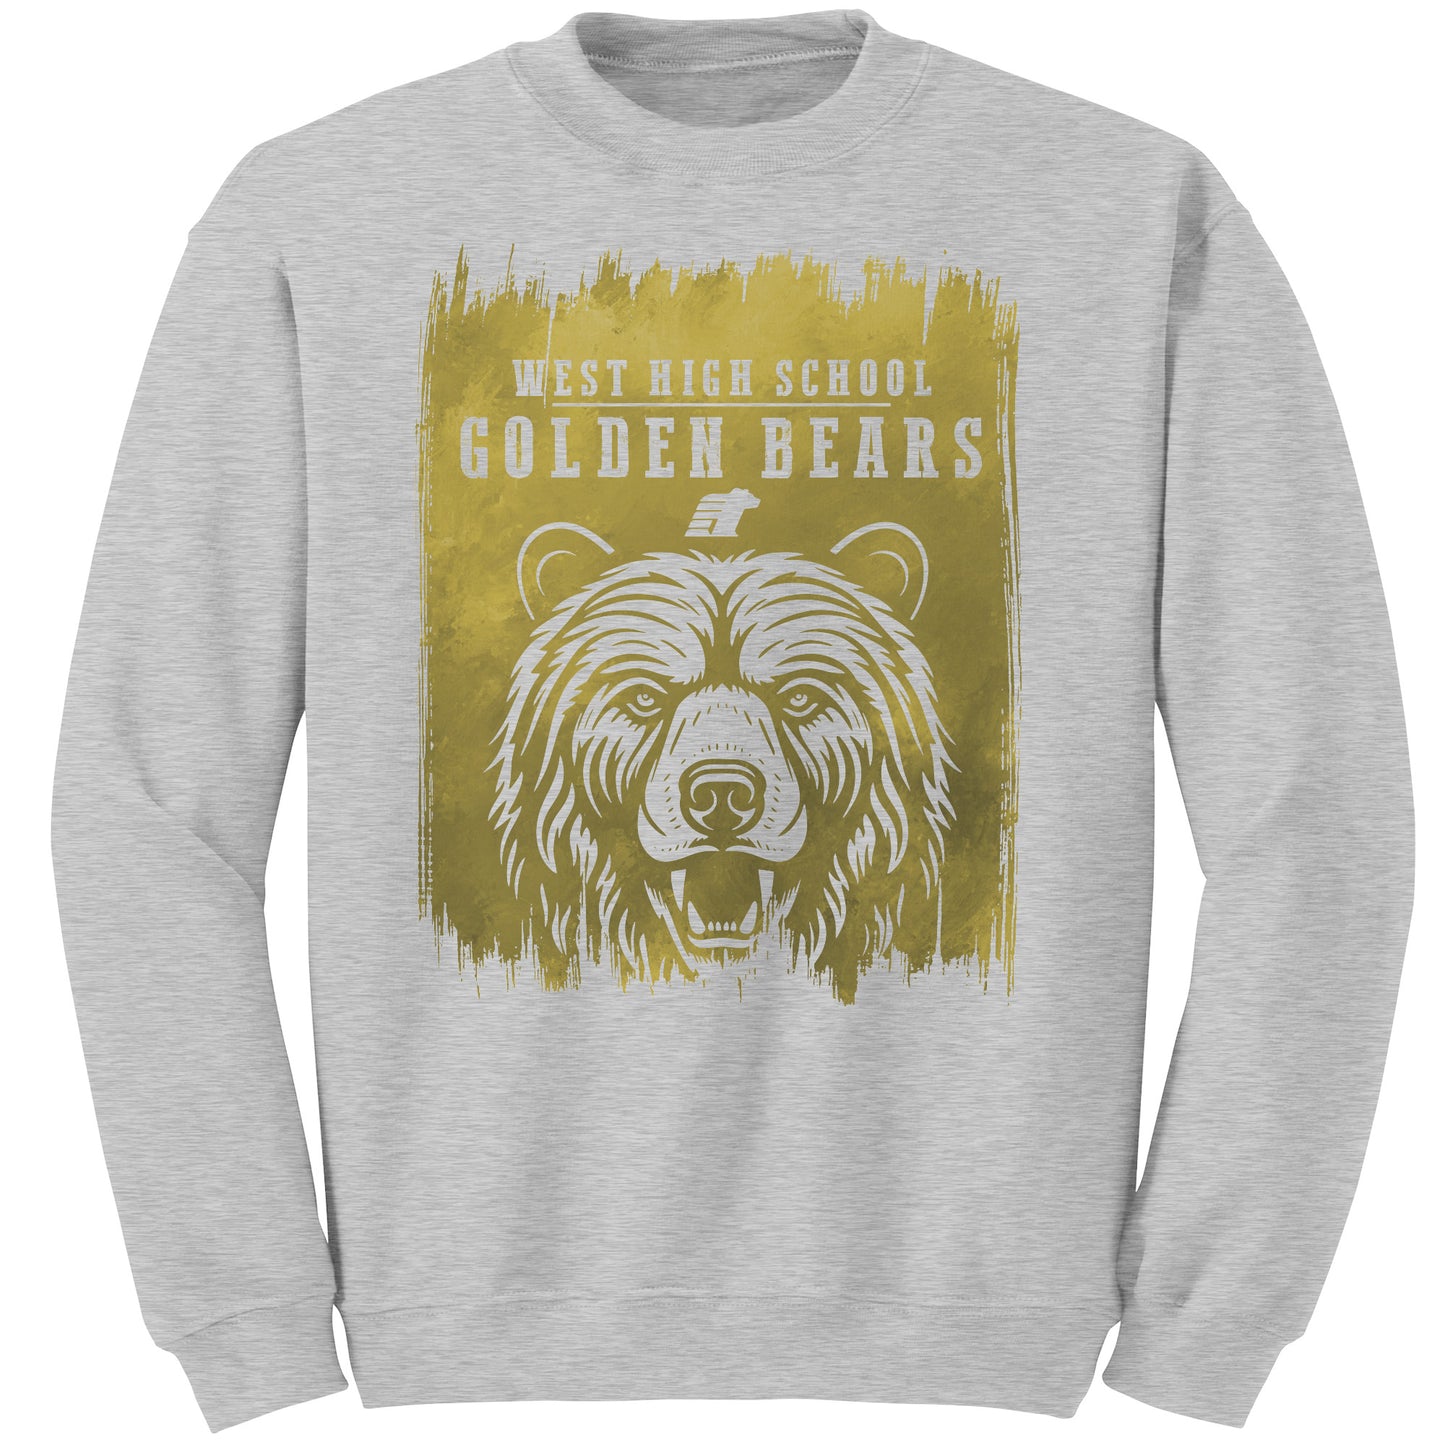 BWHS Crewneck Sweatshirt - Golden Bears Swipe